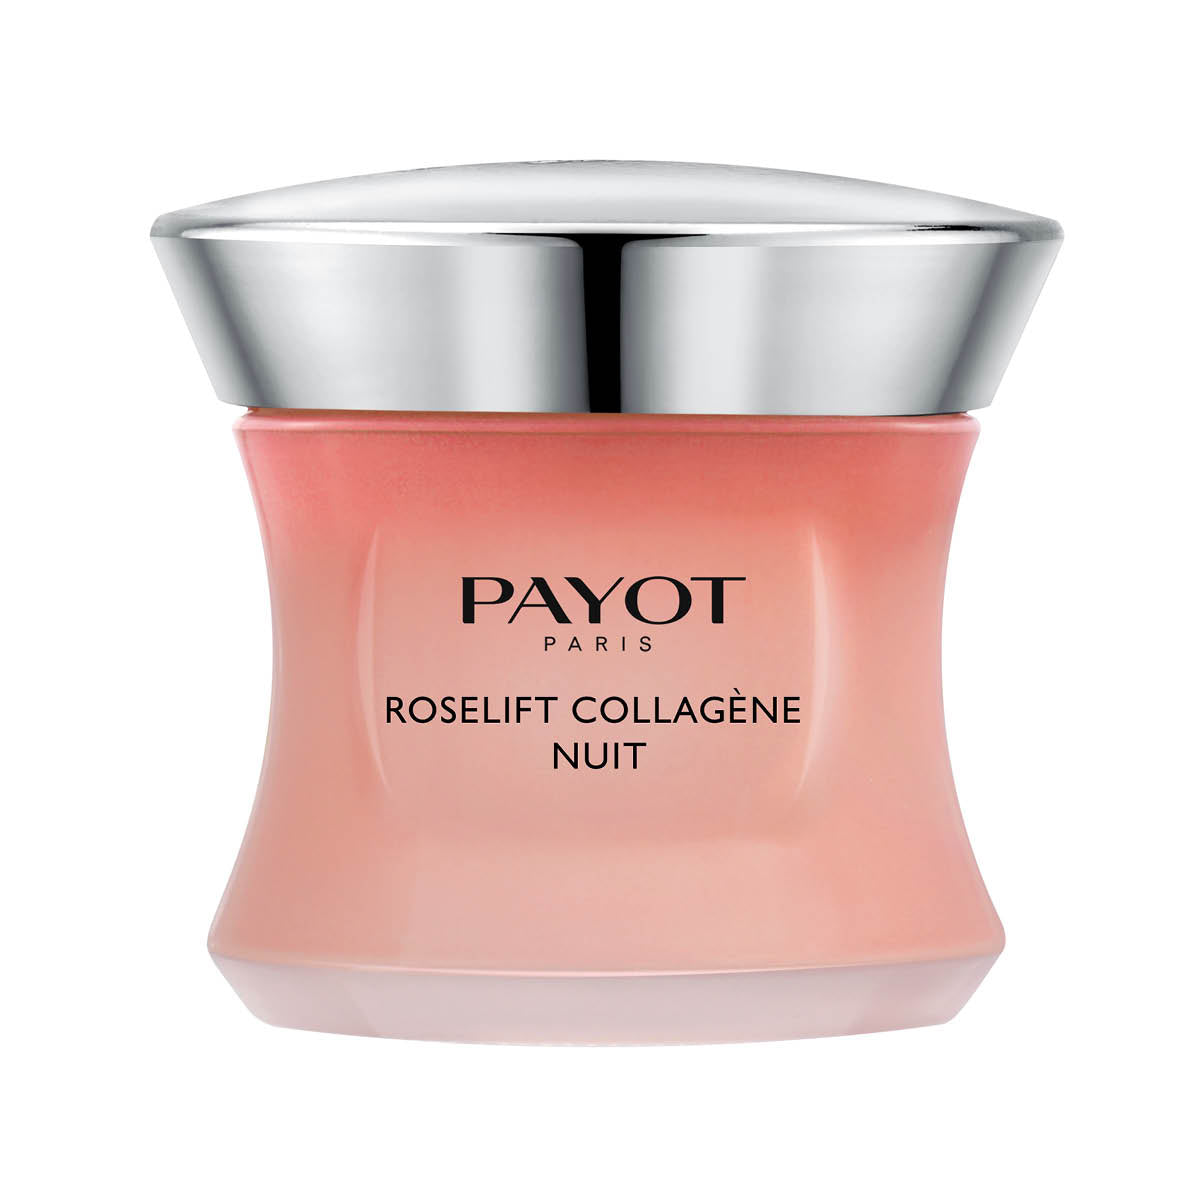 Payot Roselift Collagene Nuit 50ml